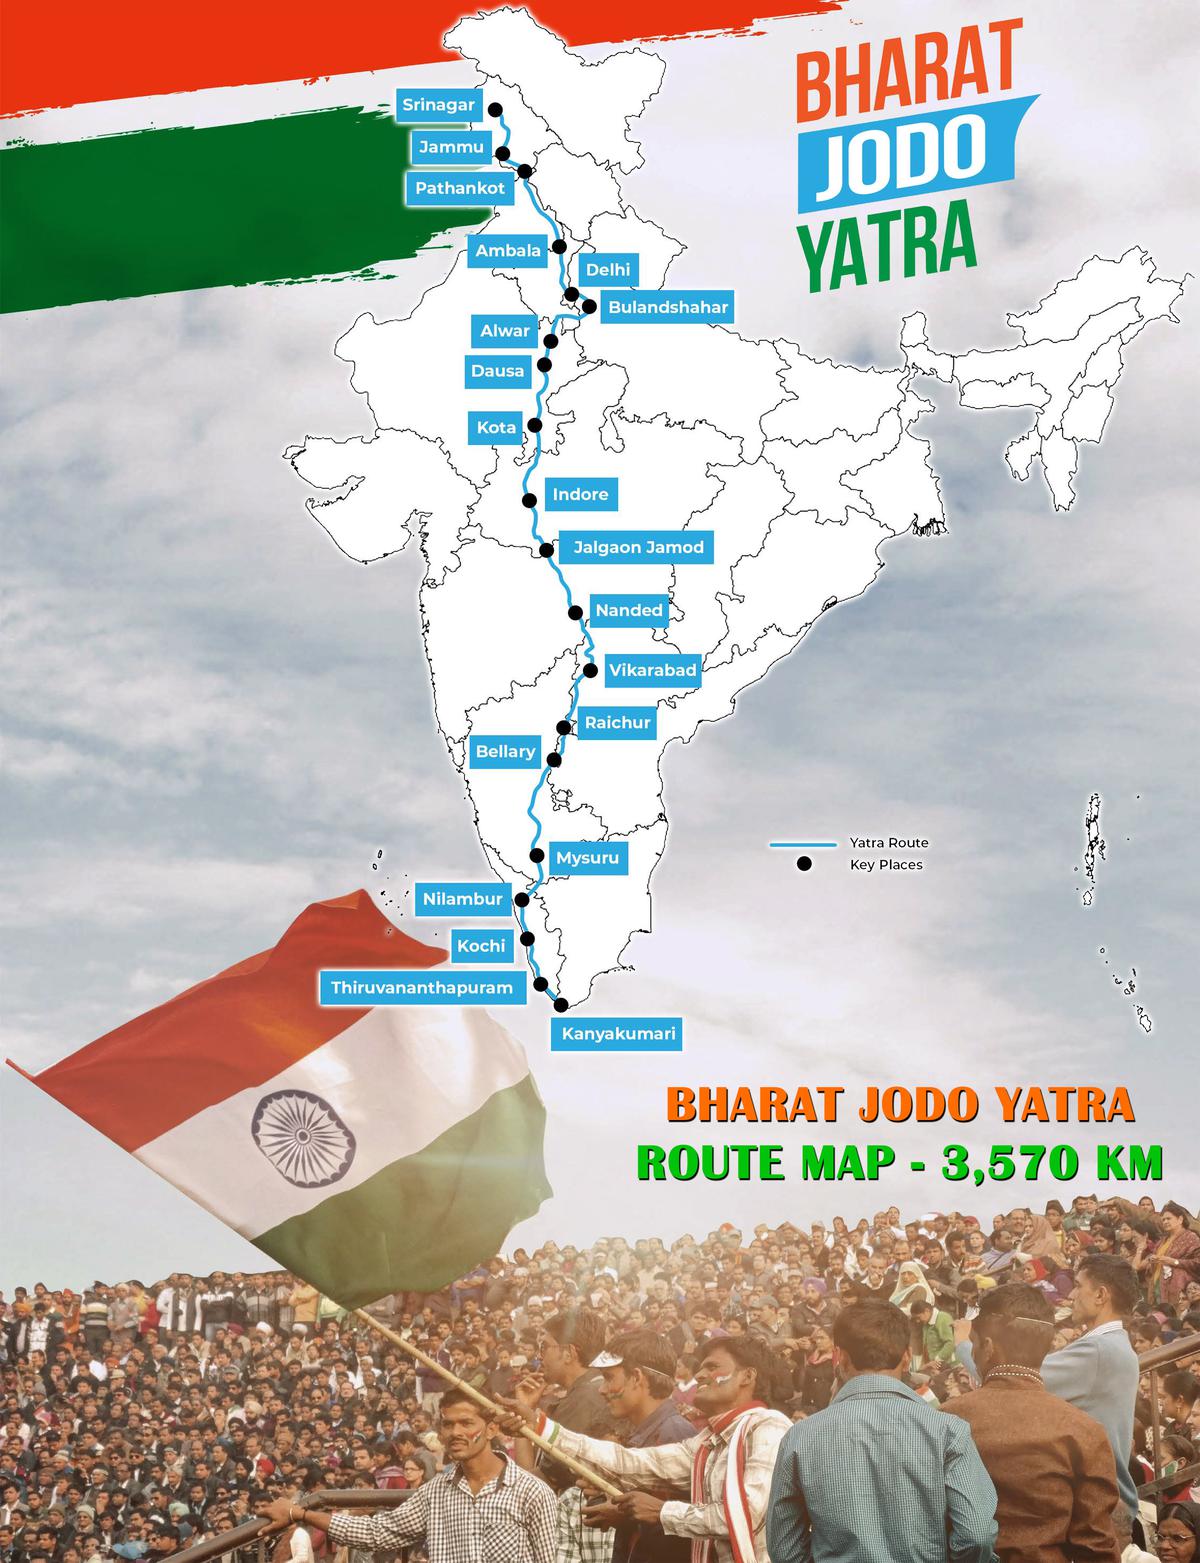 Bharat Jodo Yatra lauch | updates - The Hindu